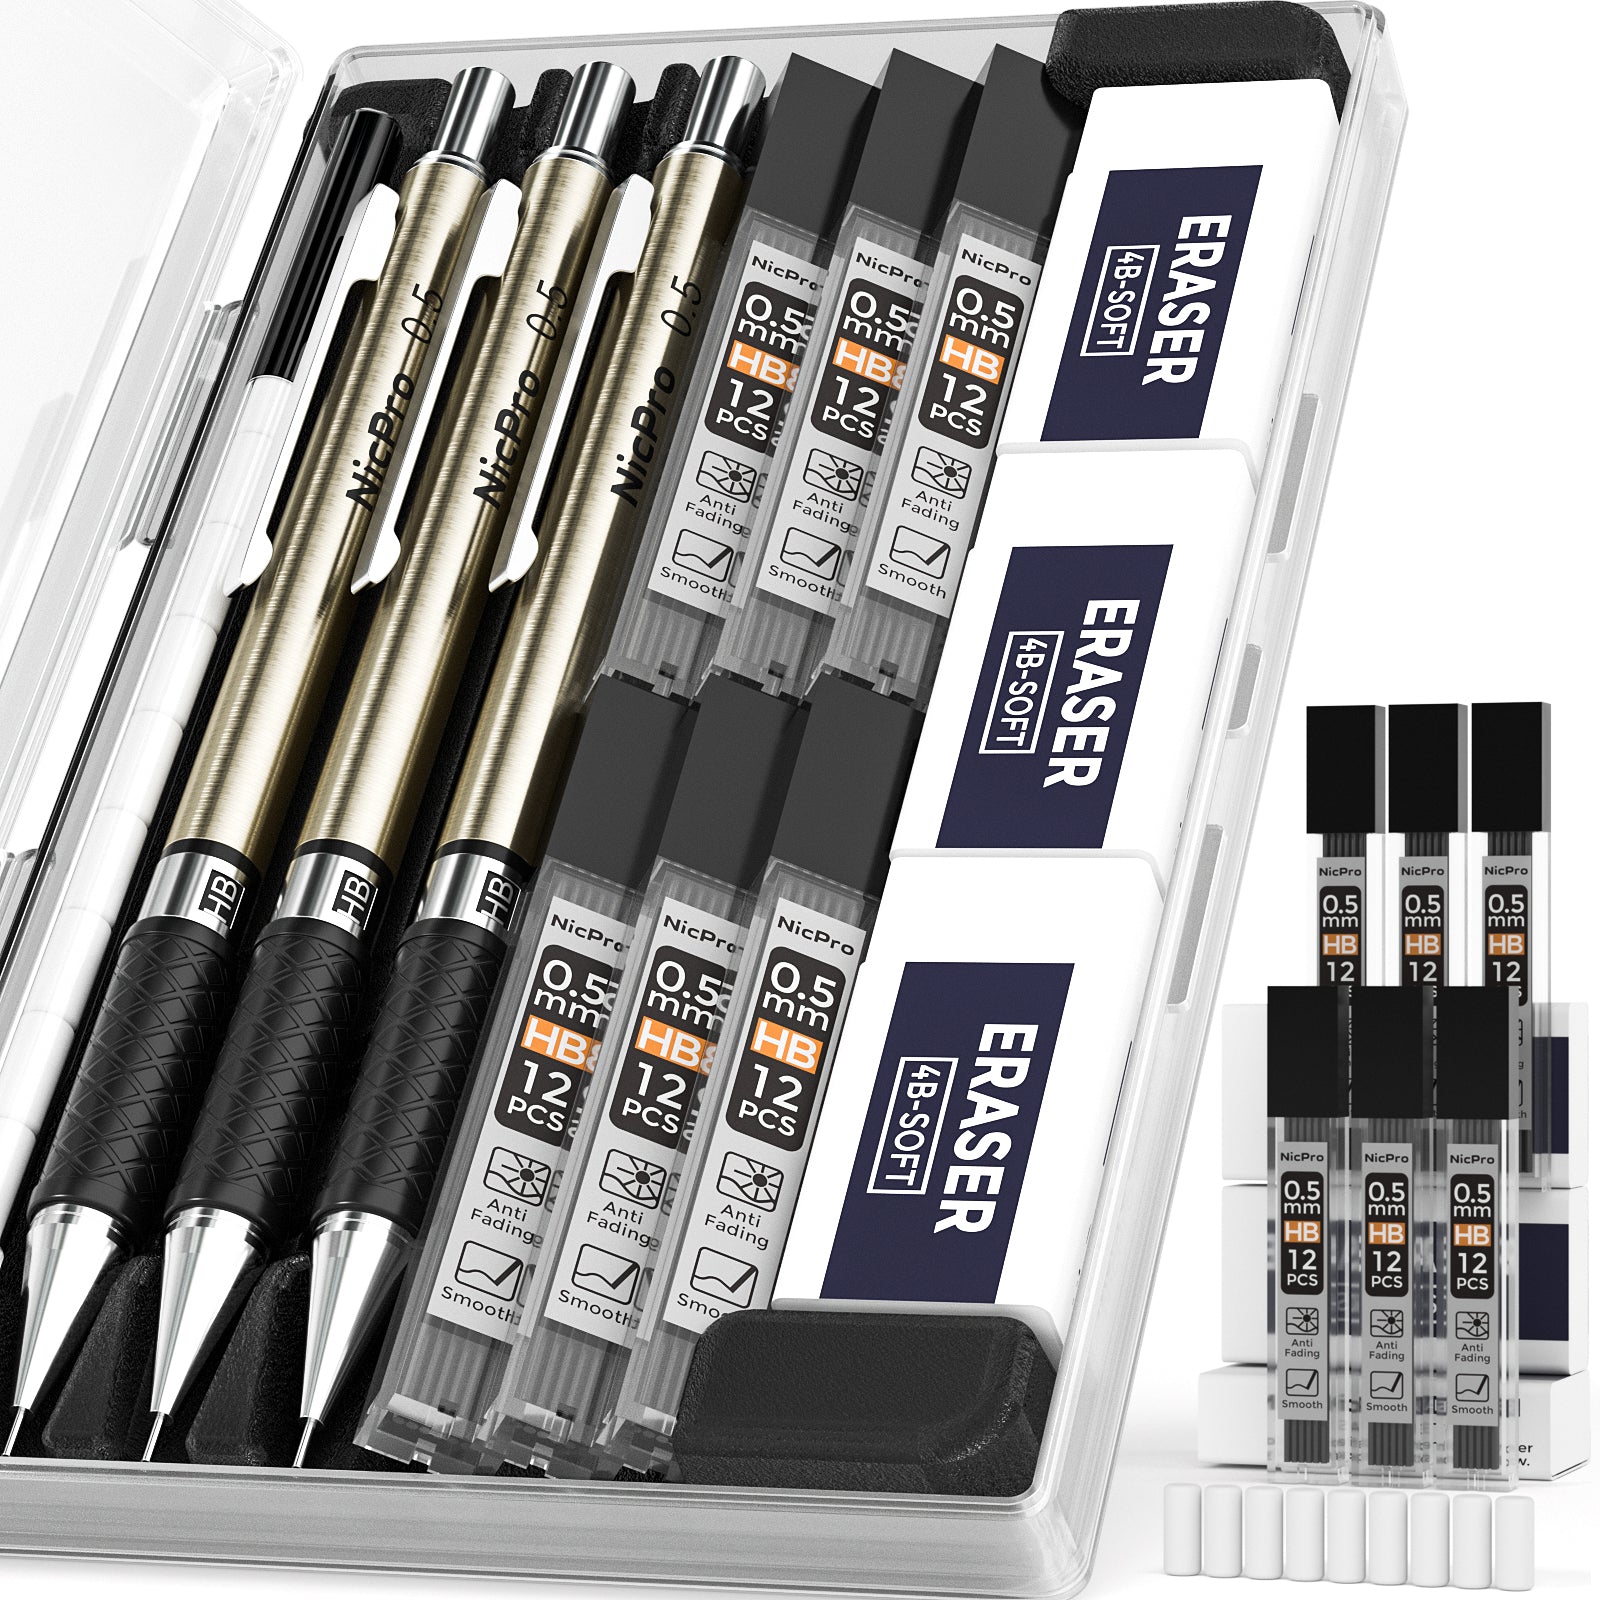 Nicpro Black Art Mechanical Pencil Set, 5PCS Metal Drafting Pencils 0.